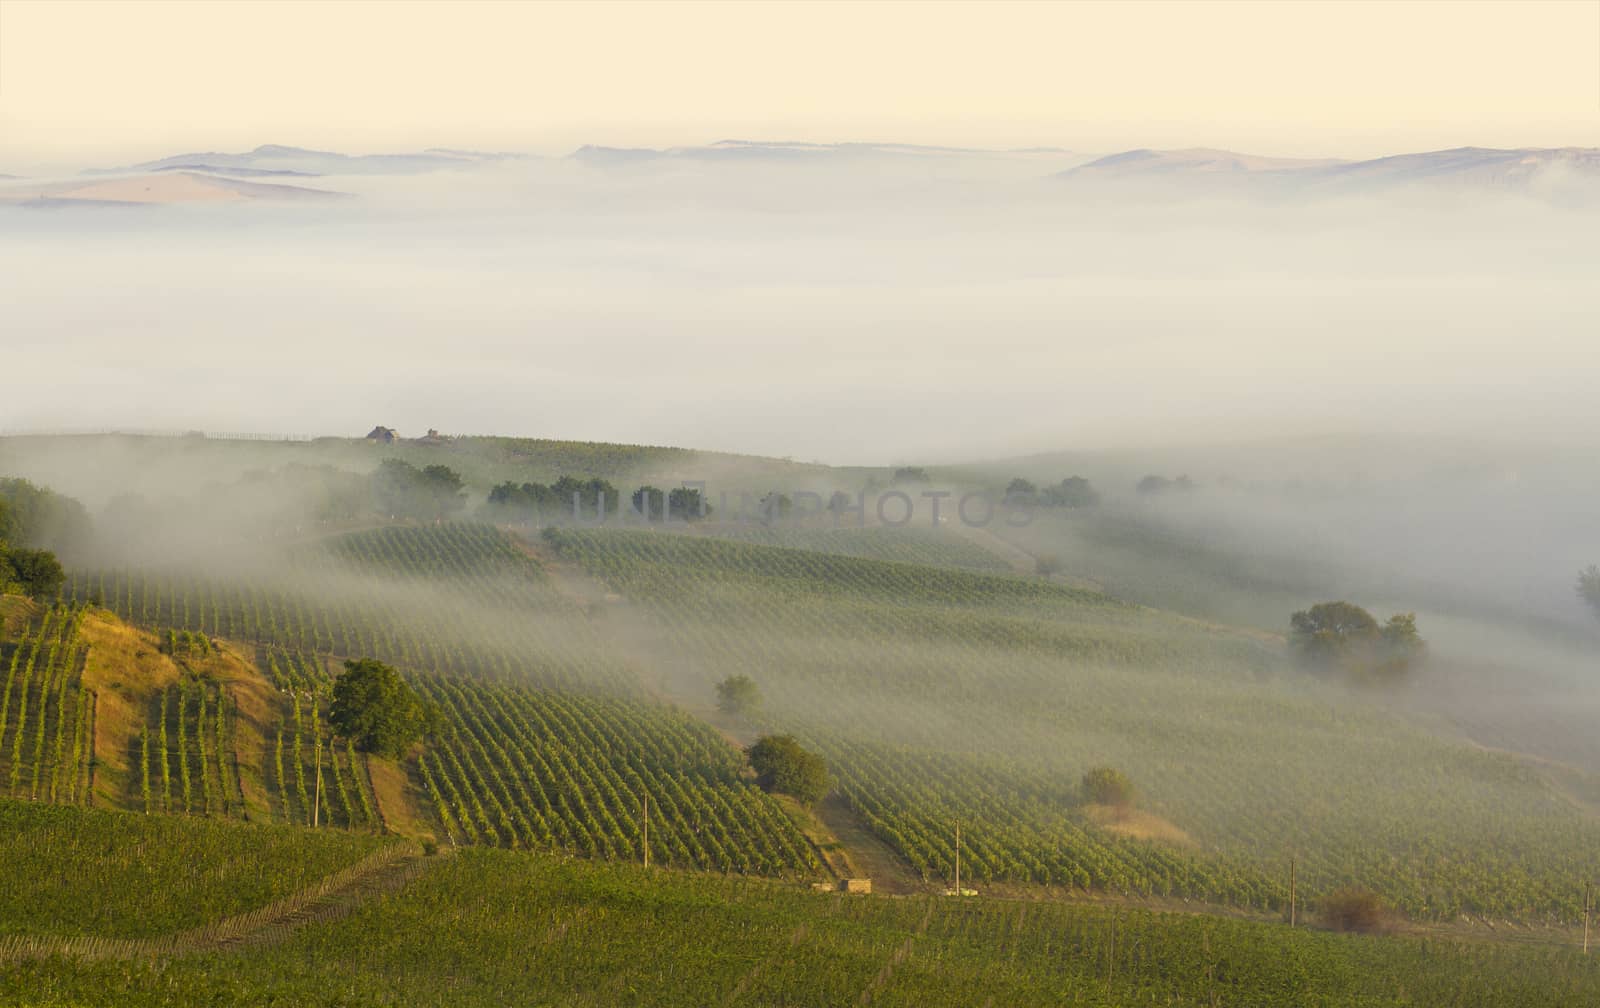 Vineyard in the morning fog by macondo